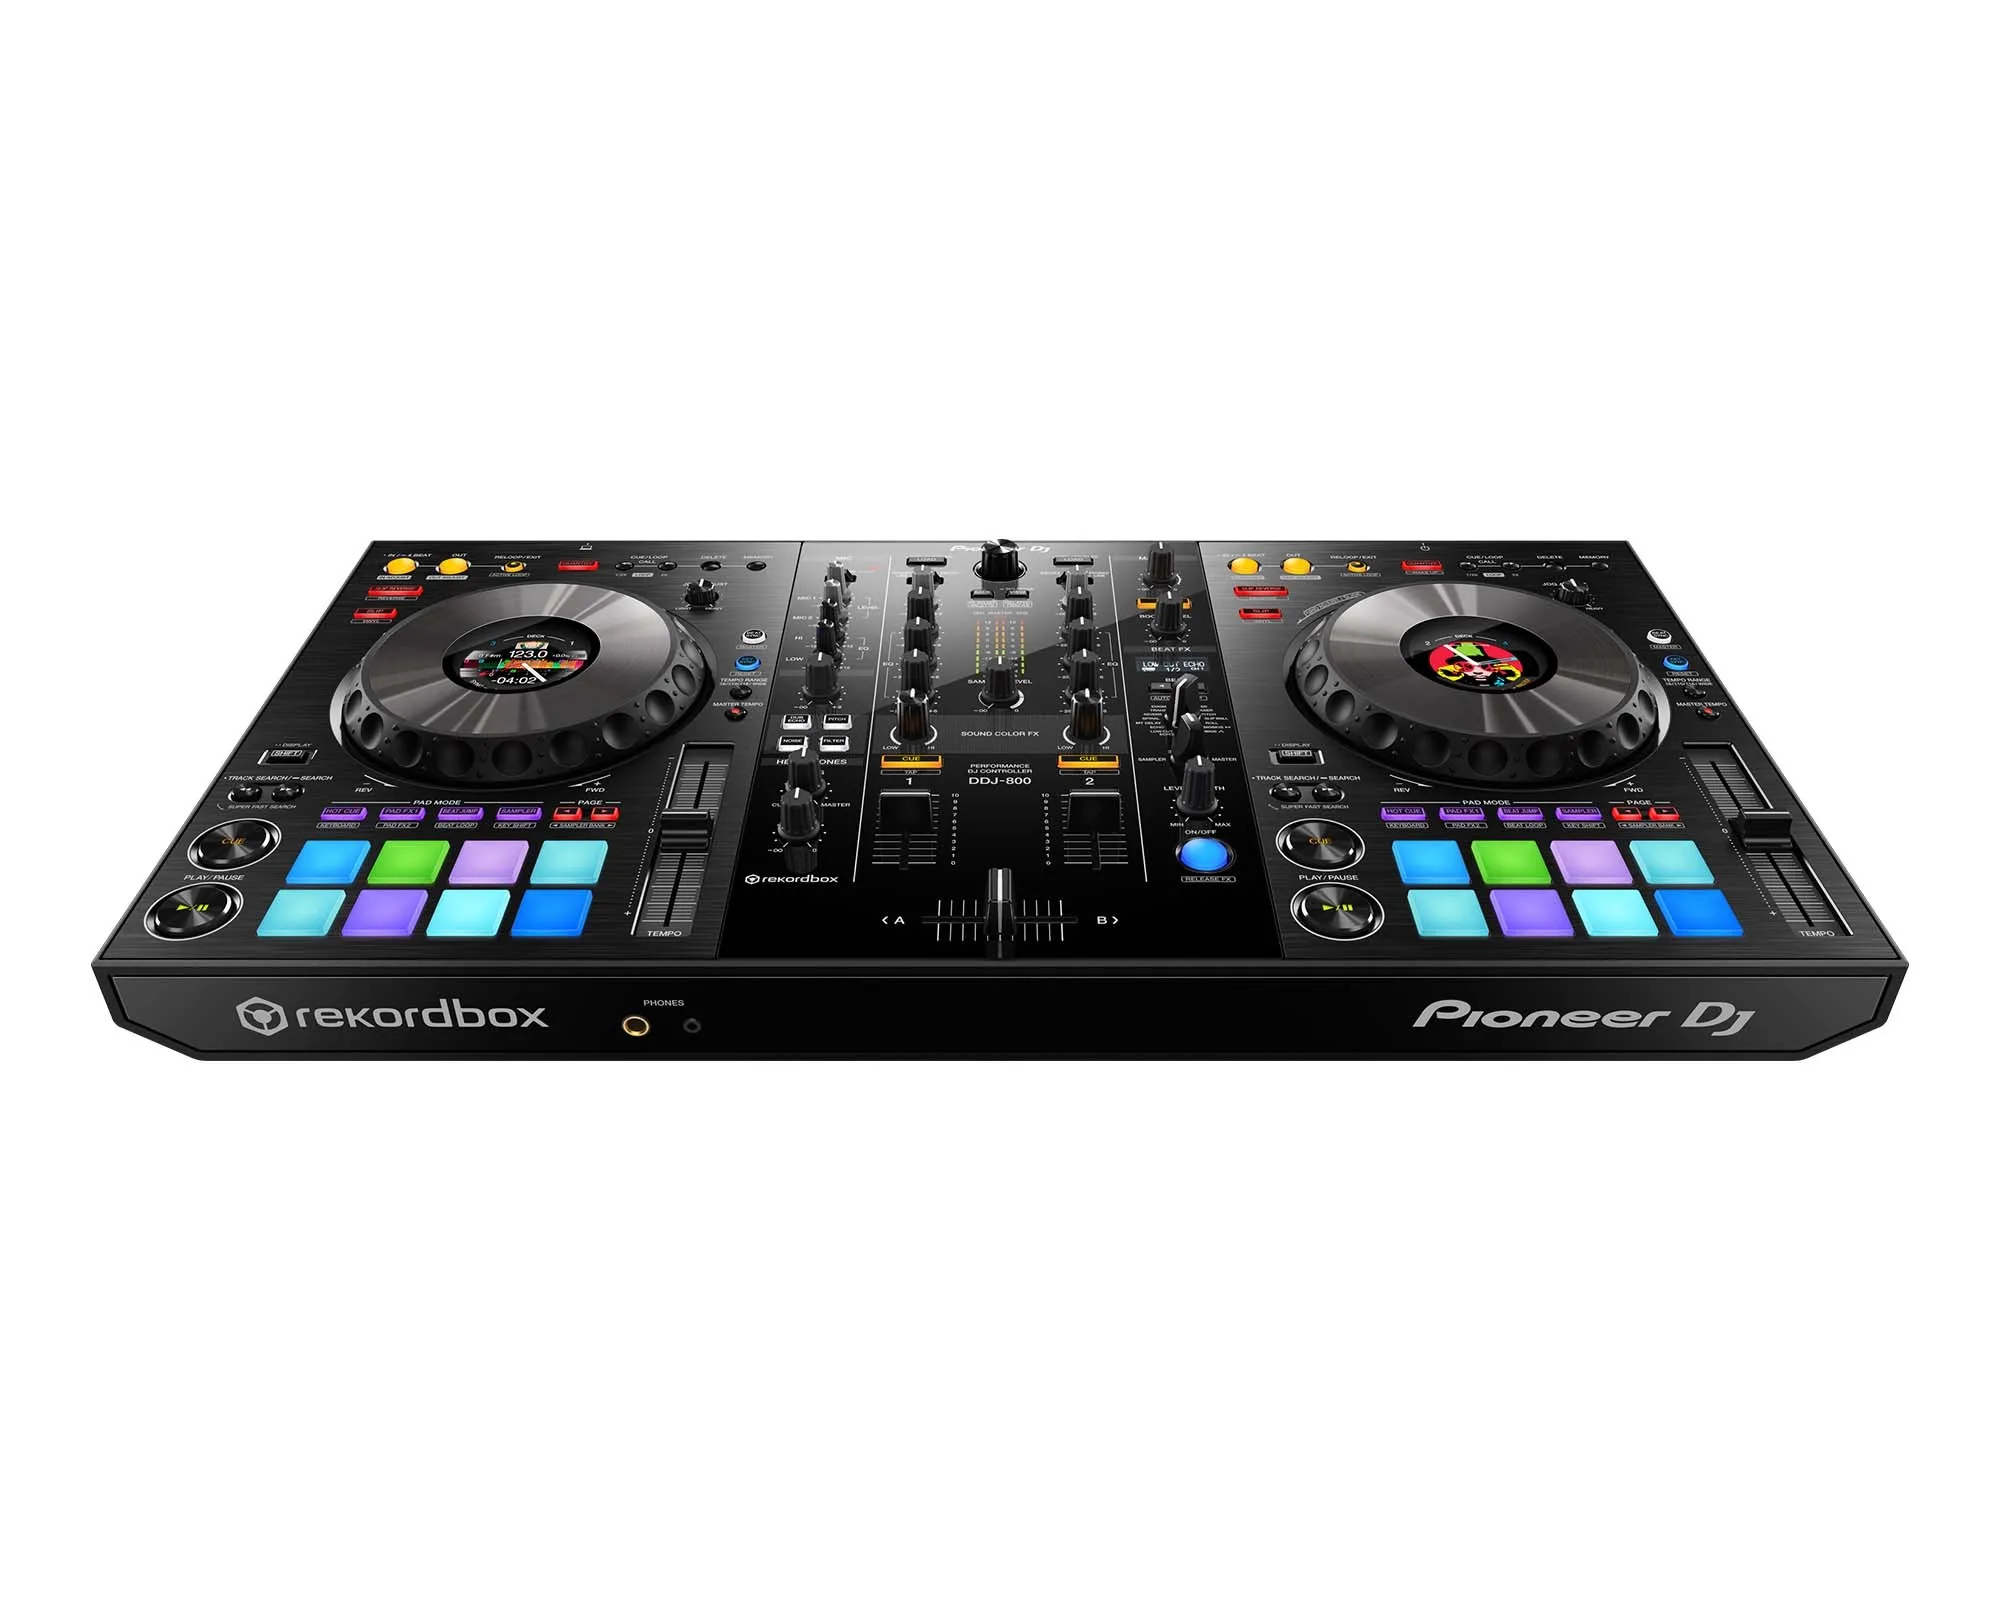 

Best Great Rekordbox Pioneer DDJ800 2Ch DJ Controller with FX for rekordbox DJ Software